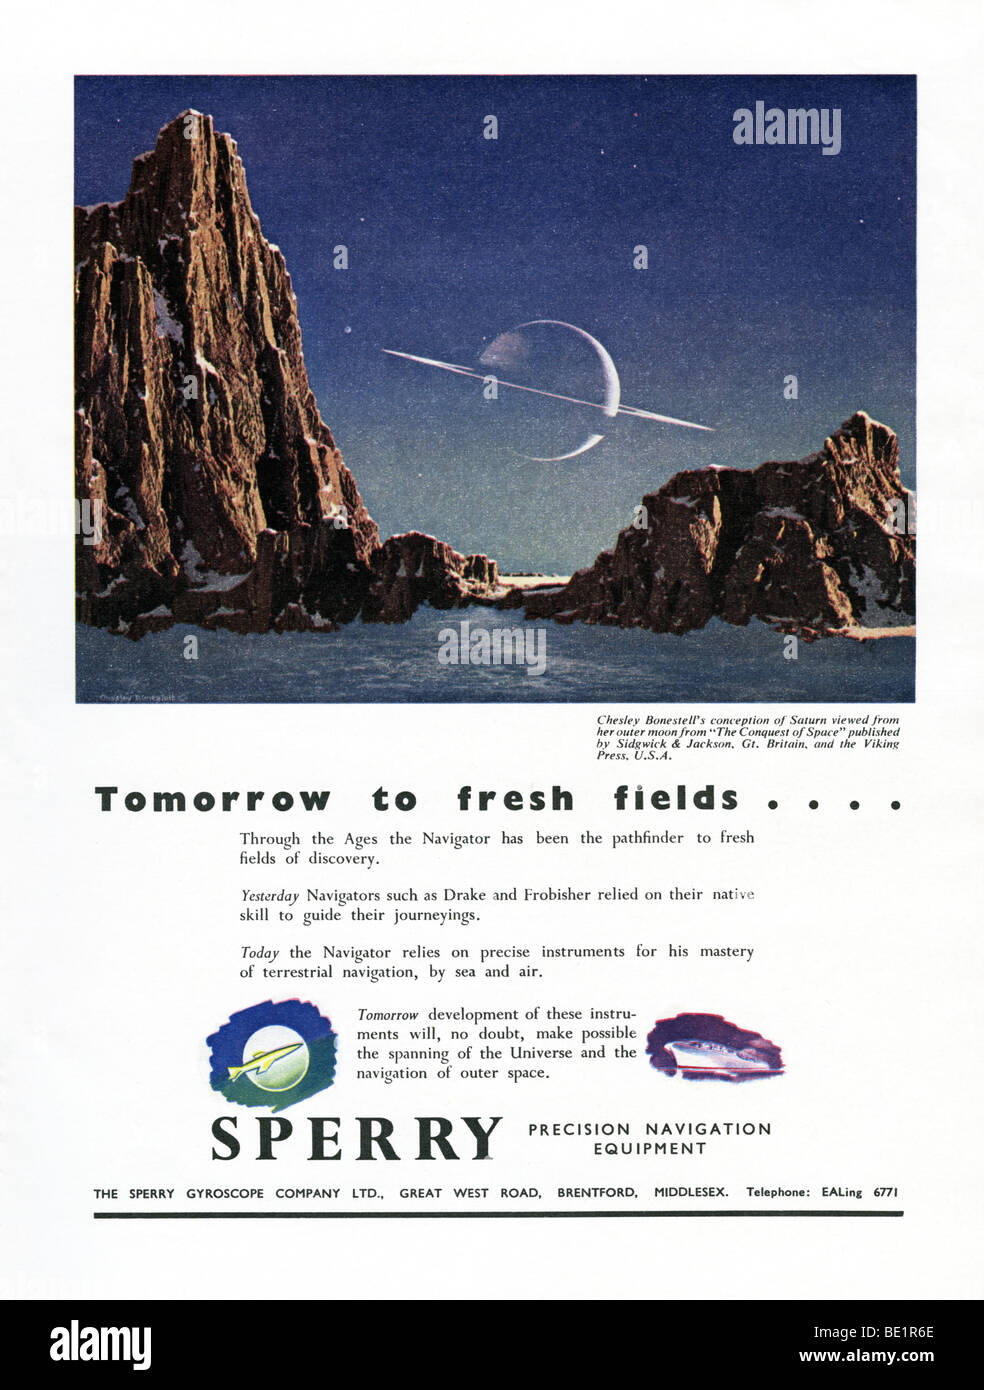 1951 pubblicità per Sperry apparecchiature di navigazione Foto Stock